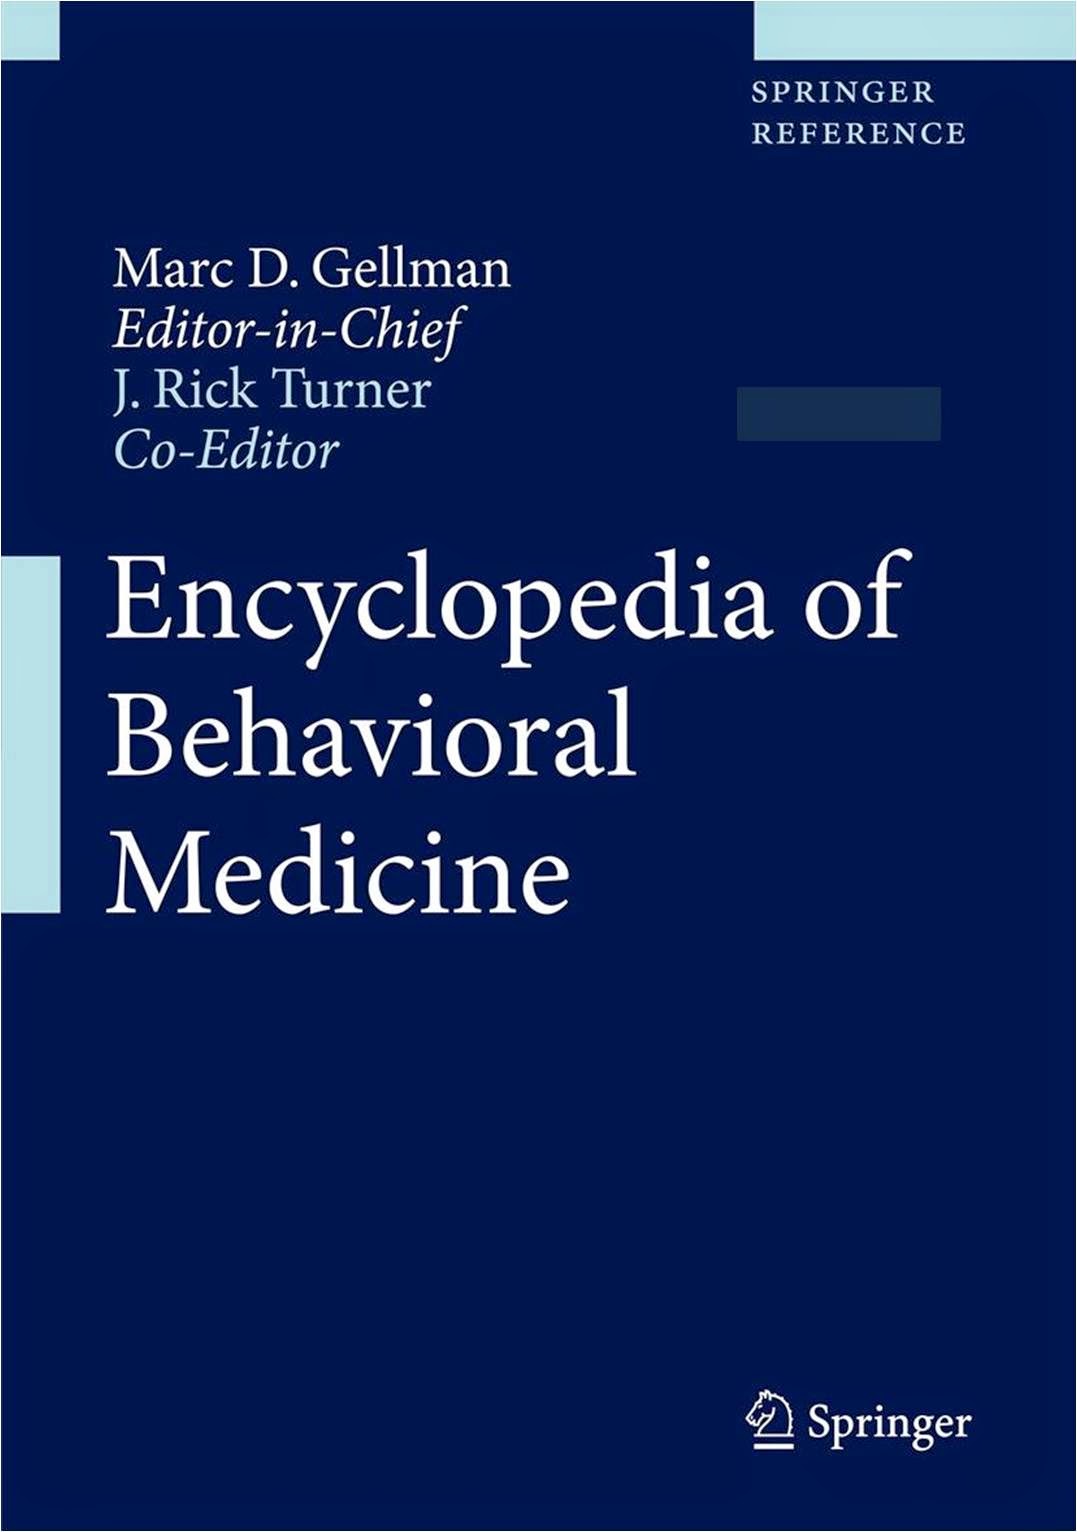 http://kingcheapebook.blogspot.com/2014/08/encyclopedia-of-behavioral-medicine.html